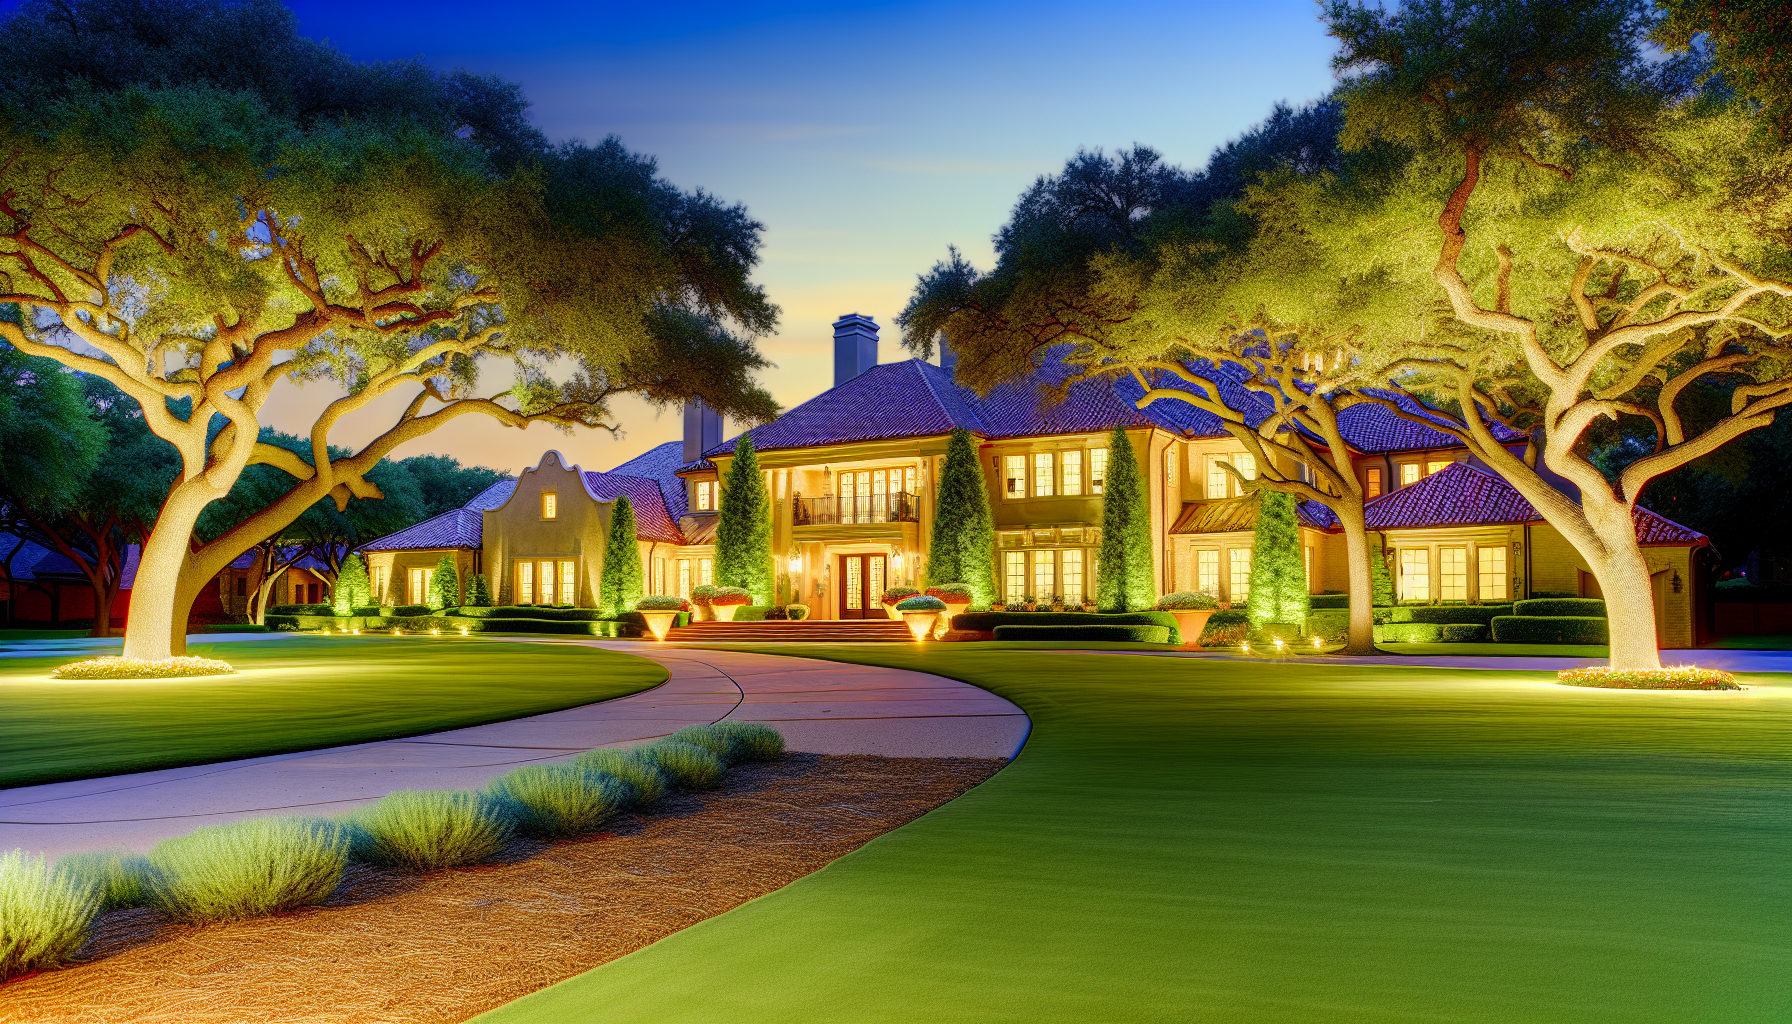 Exterior of Jordan Spieth's $7.1 million mansion in Dallas